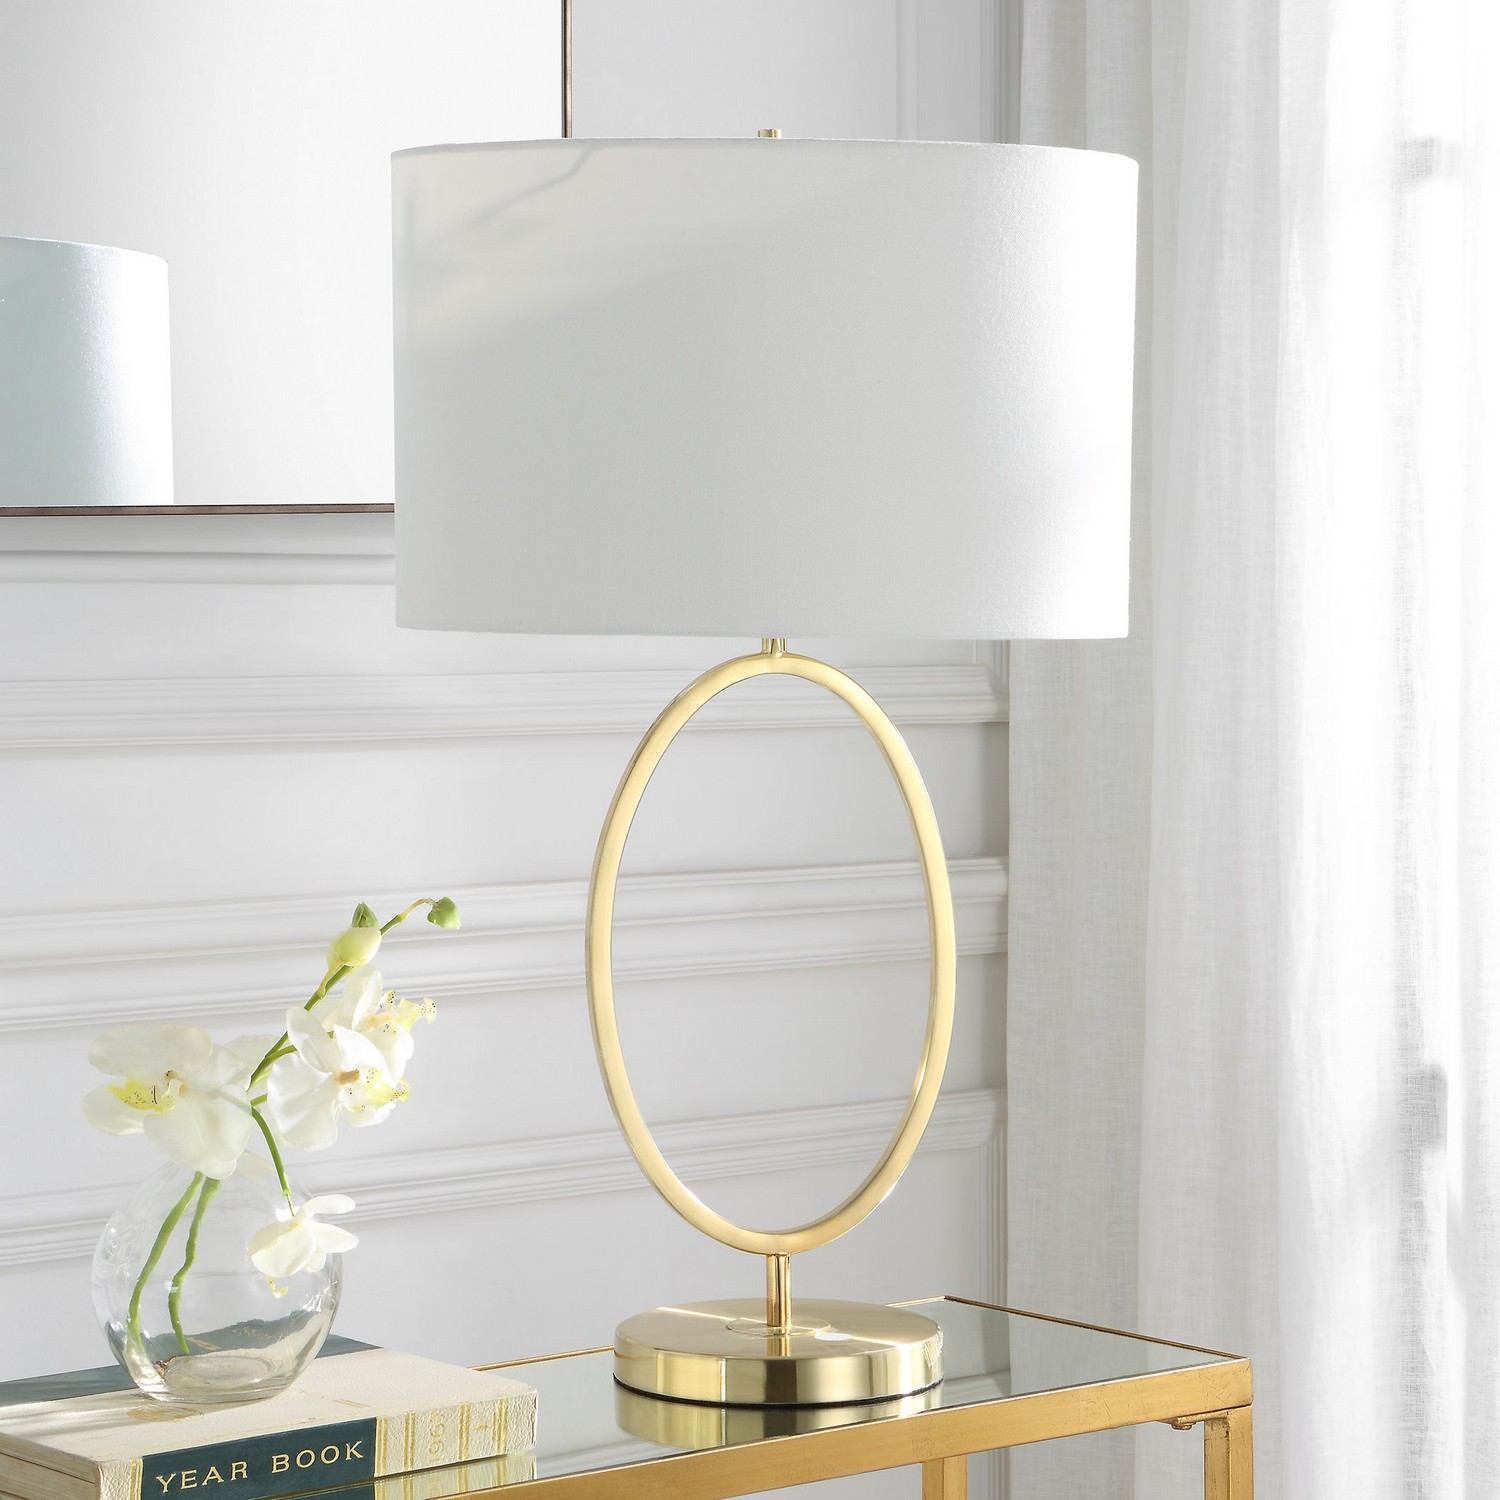 Uttermost W26083-1 Table Lamp - Golden Brass